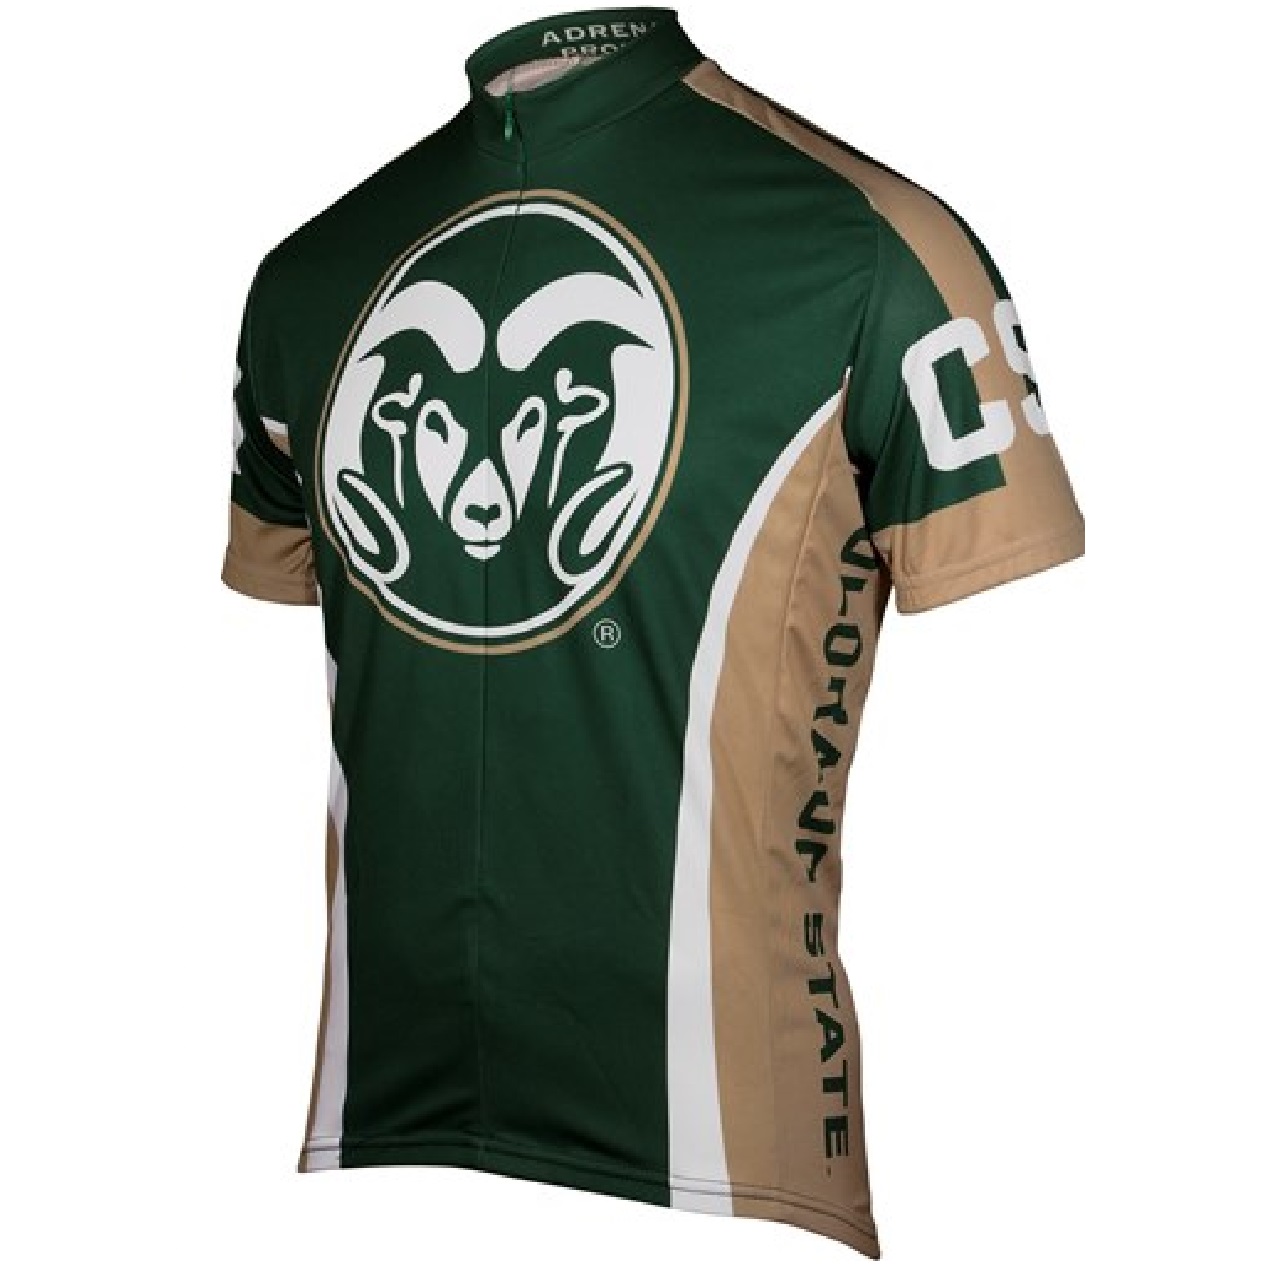 Adrenaline Promo Colorado State University College 3/4 zip Men's Cycling Jersey